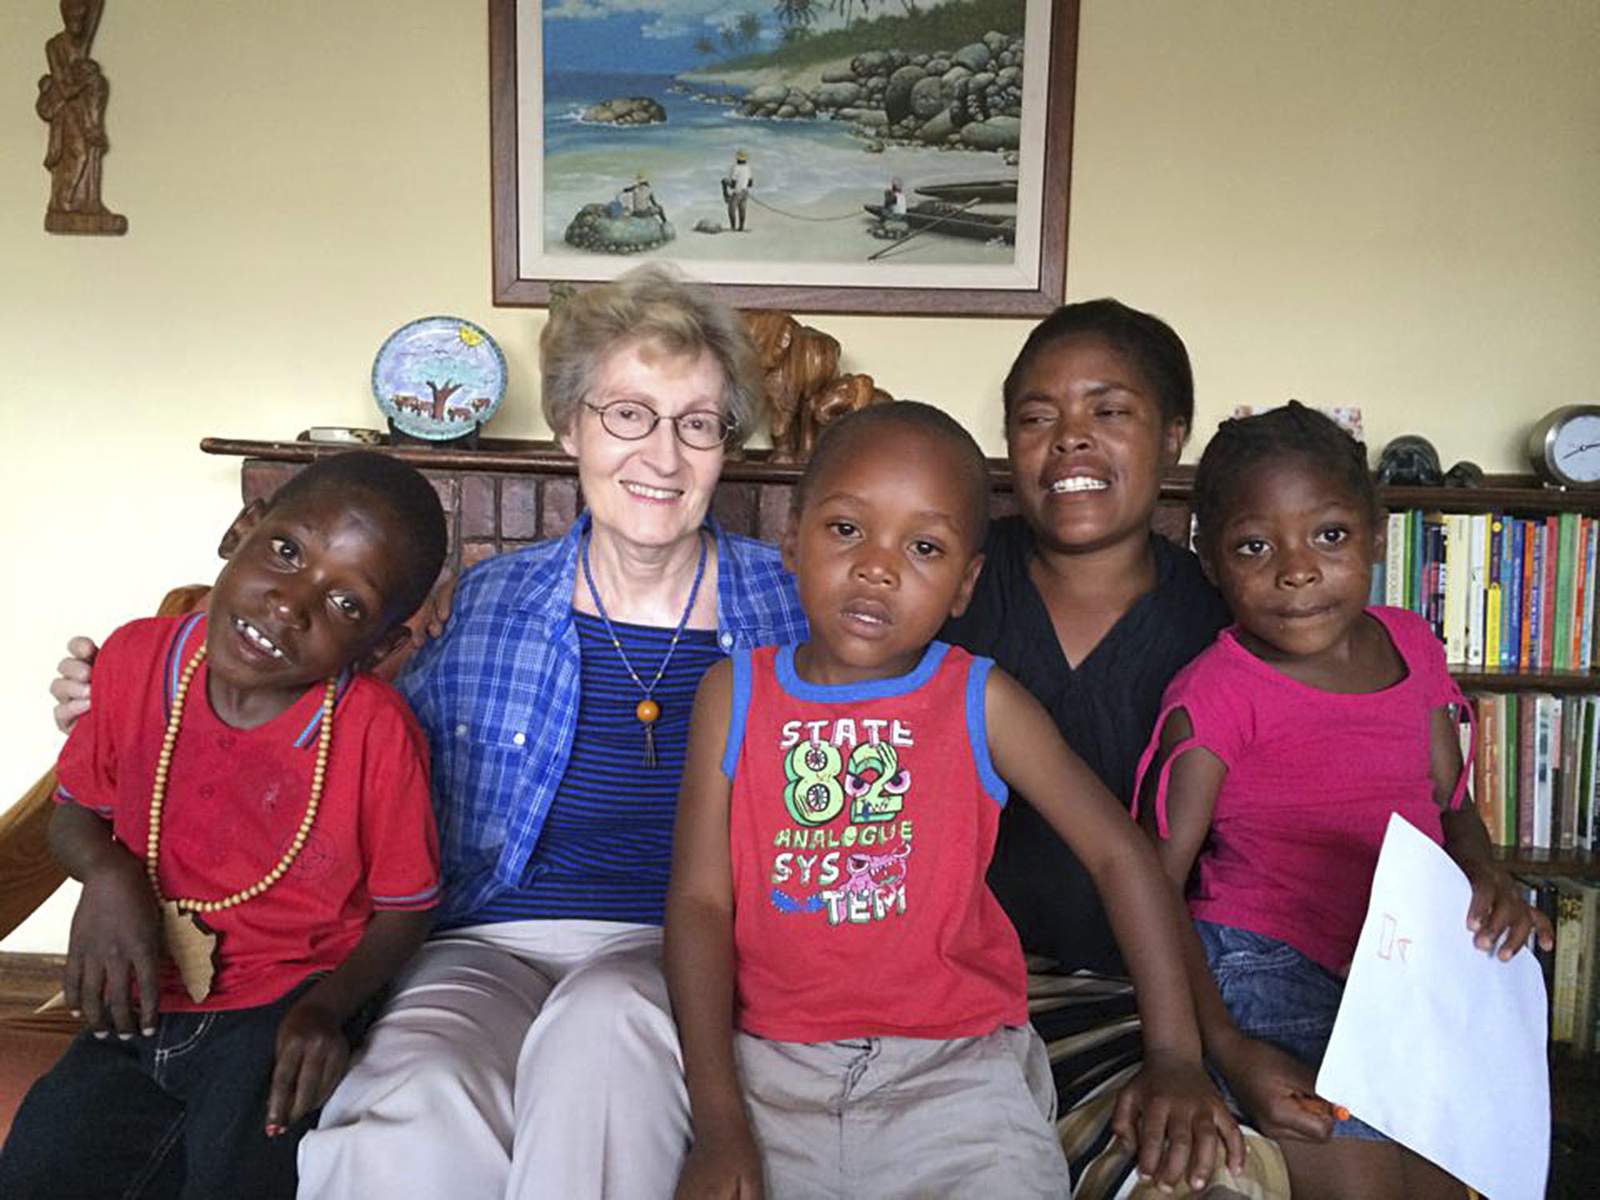 McLaughlin, nun who exposed abuses in Rhodesia, dies at 79